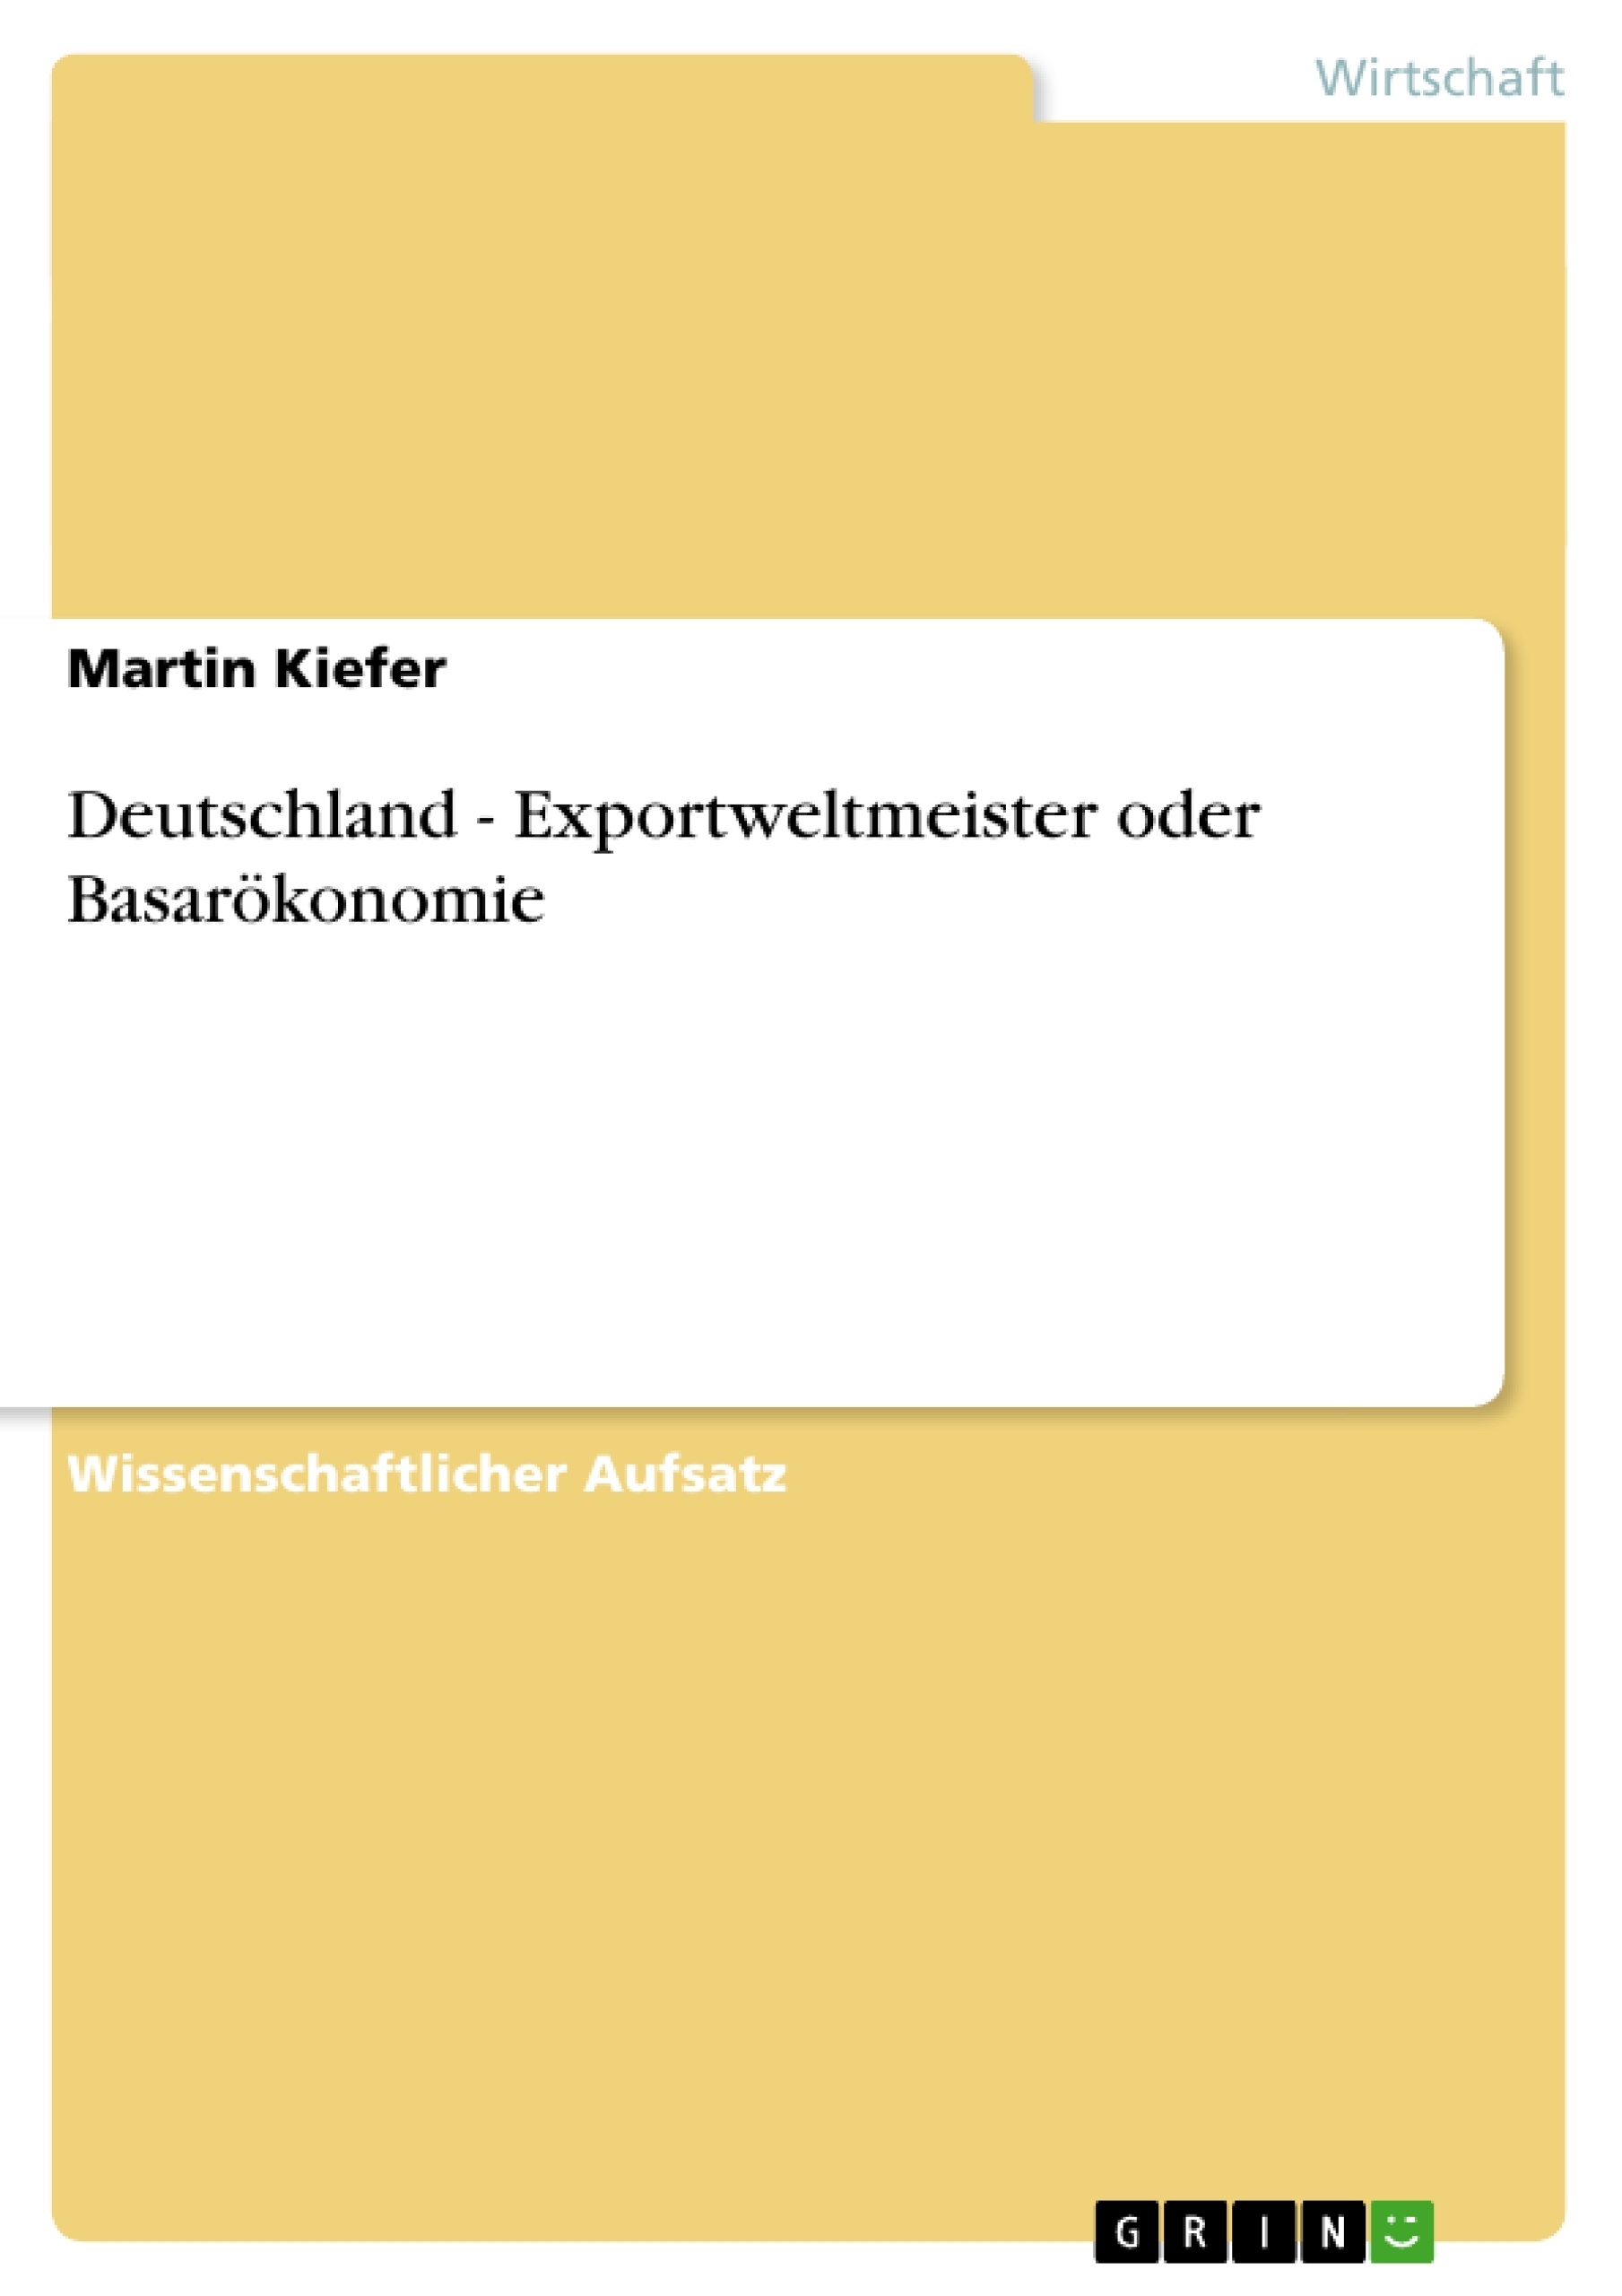 Título: Deutschland - Exportweltmeister oder Basarökonomie